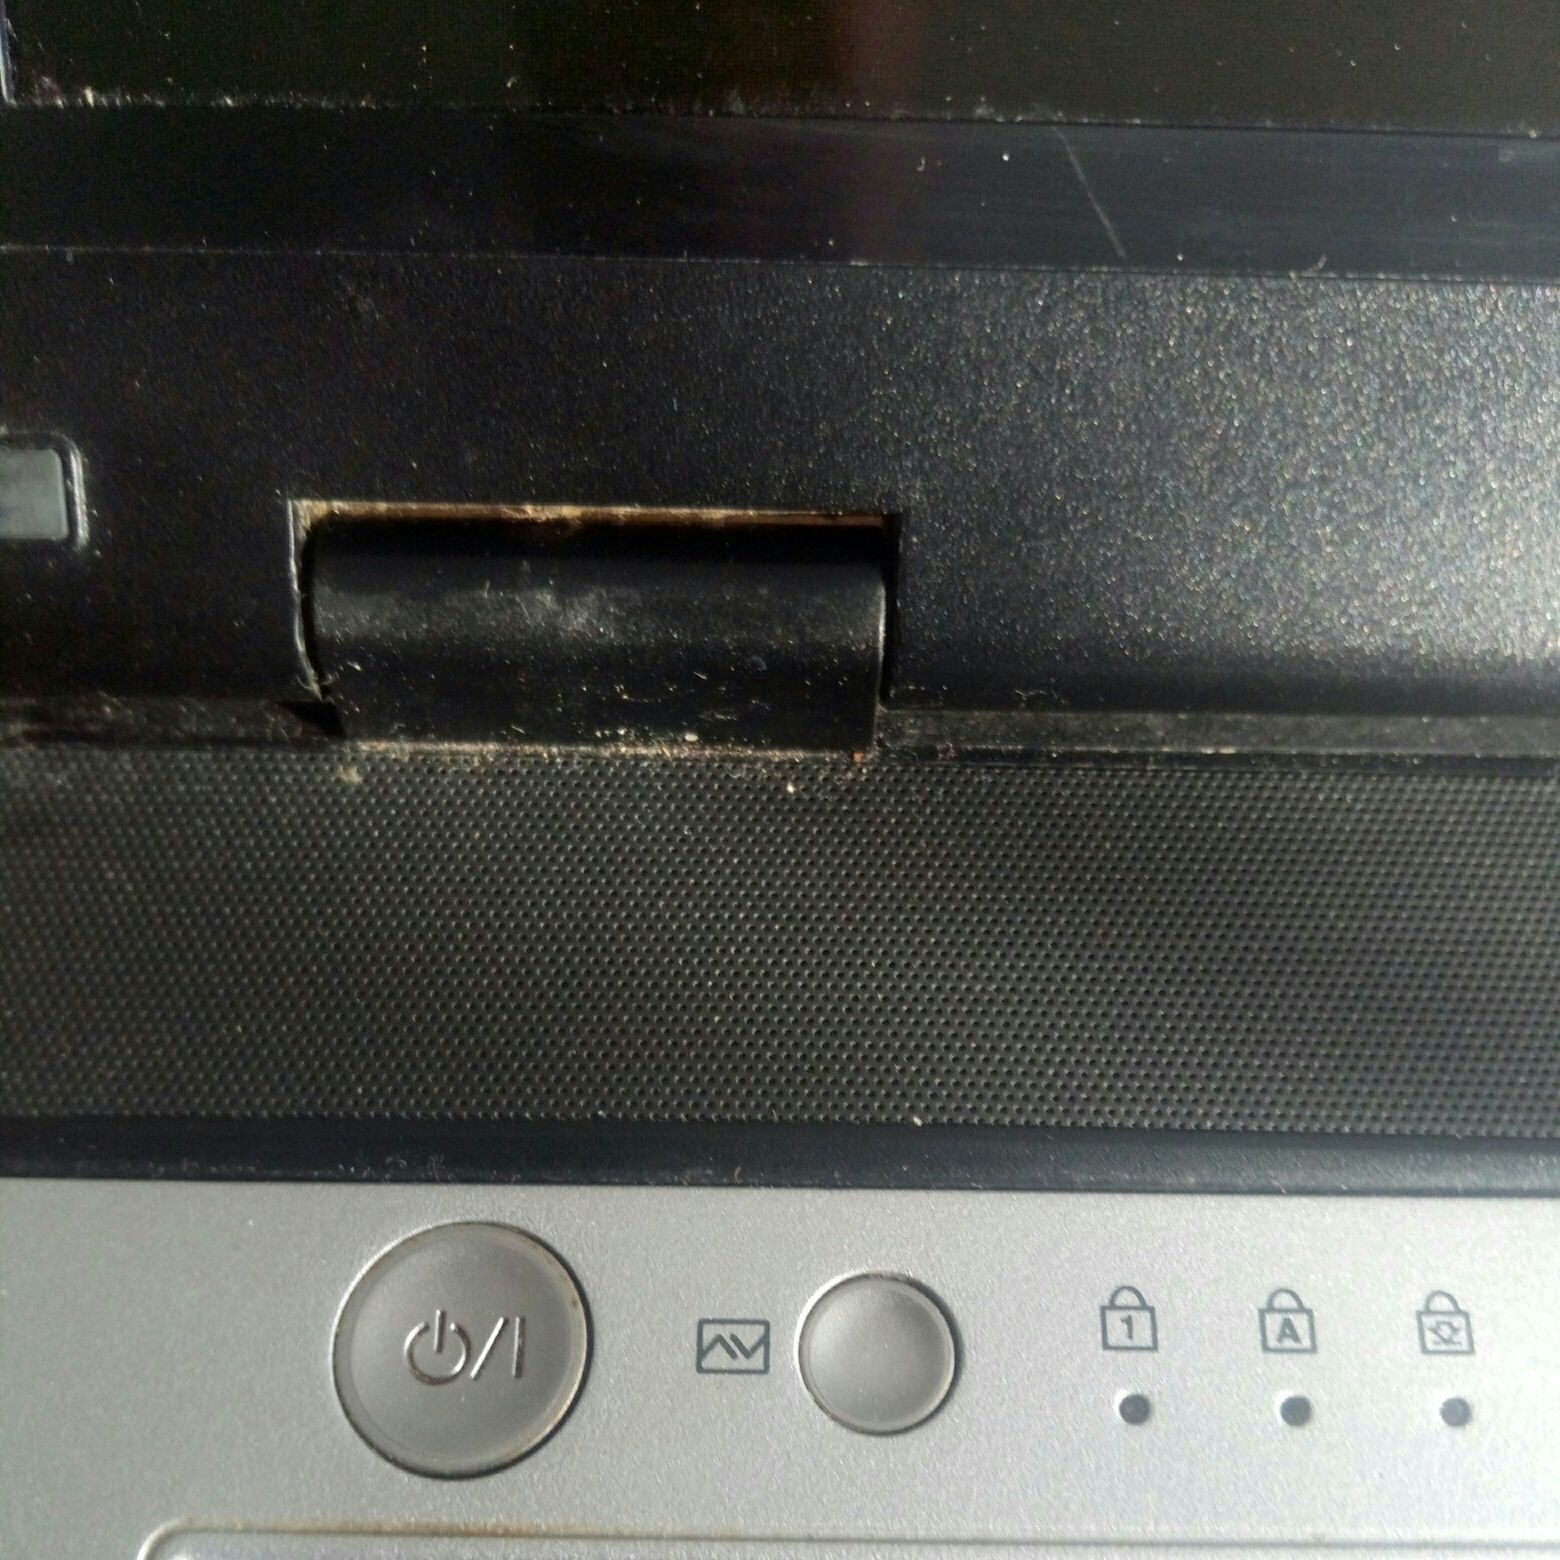 Ноутбук Samsung на SSD диск 120 Gb.